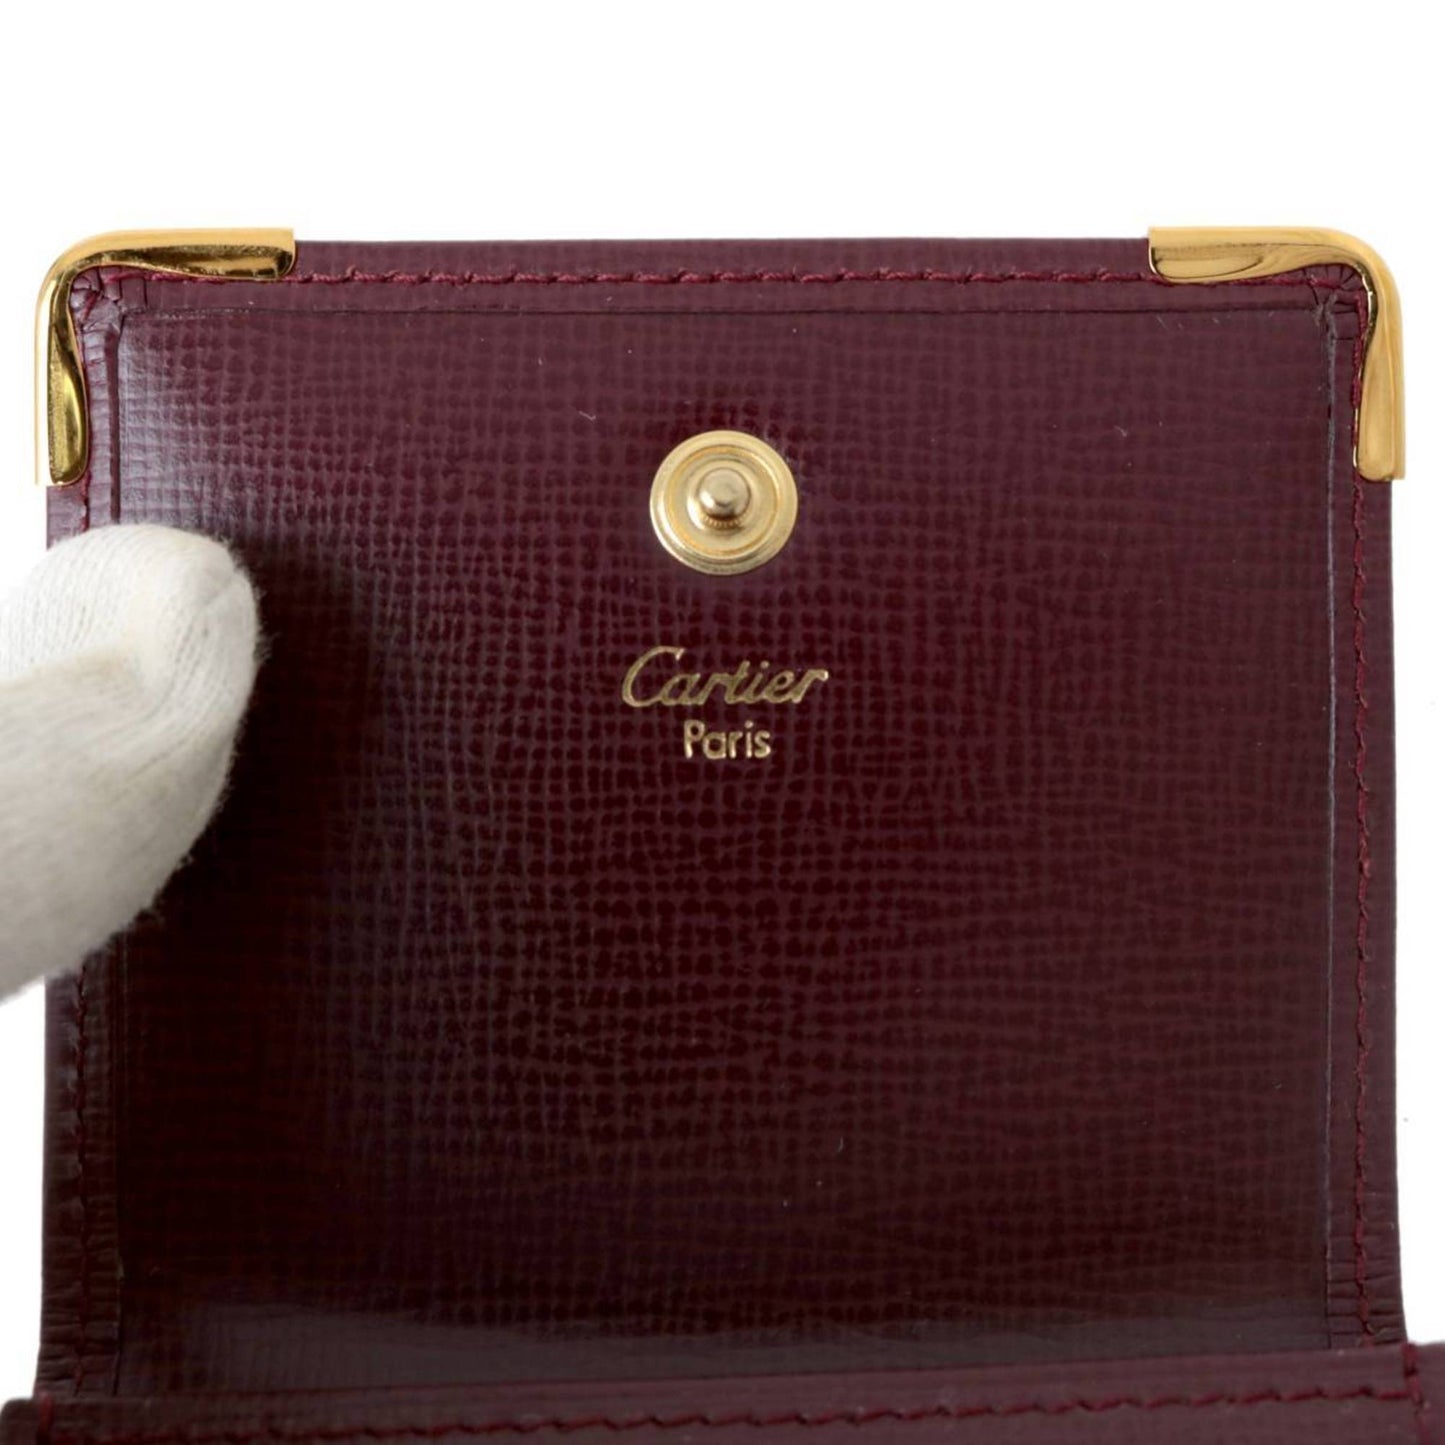 Cartier Women's Cartier Must de Cartier Leather Wallet in Burgundy